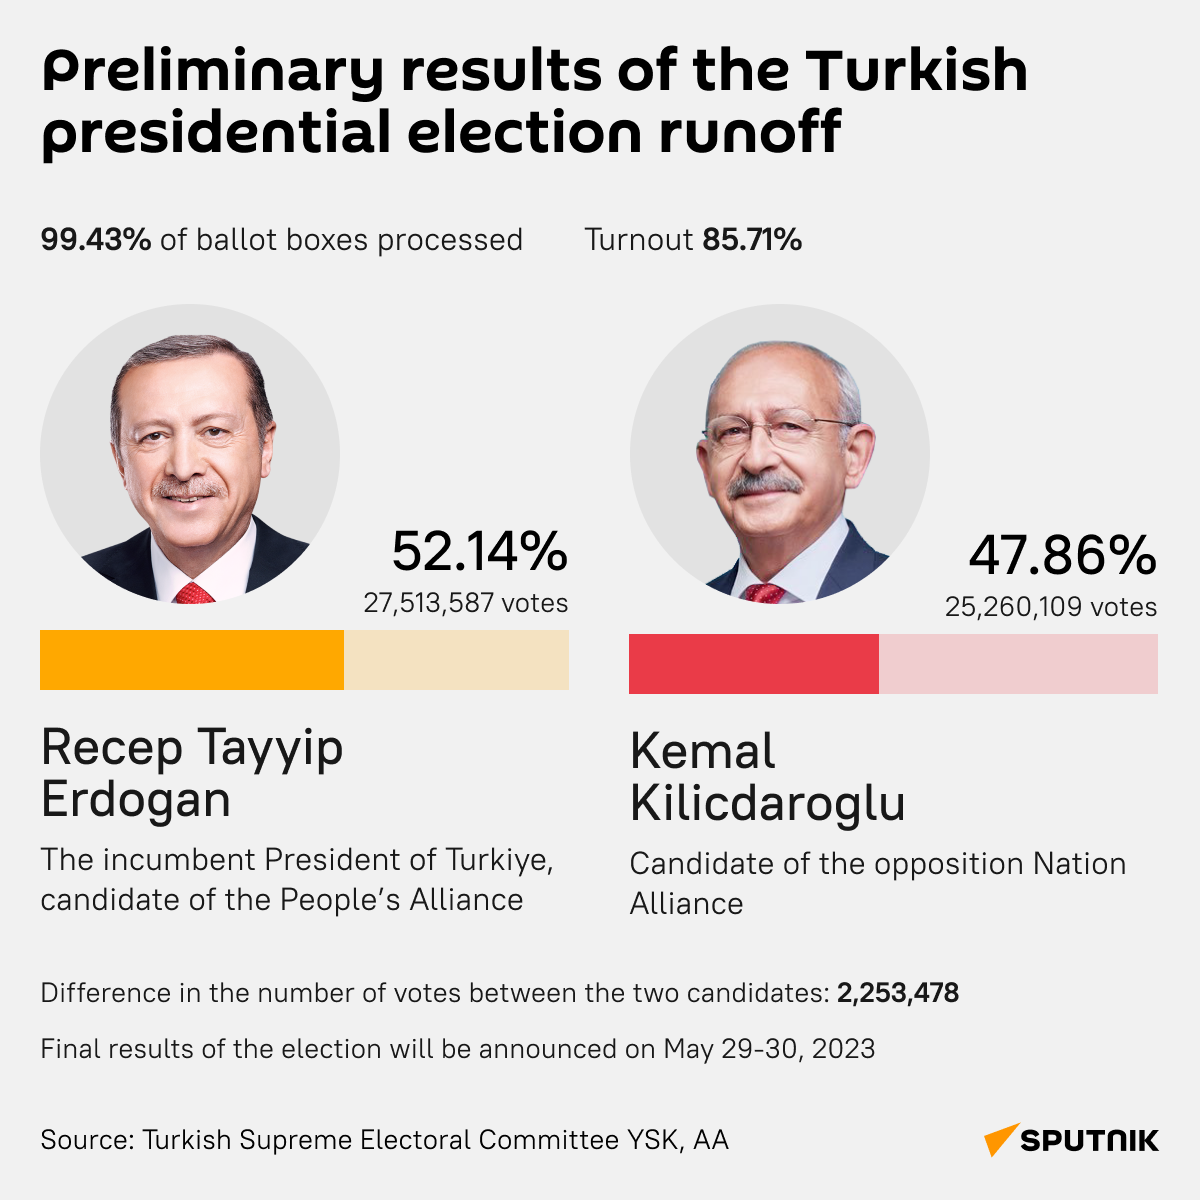 Erdogan wins desk - Sputnik International